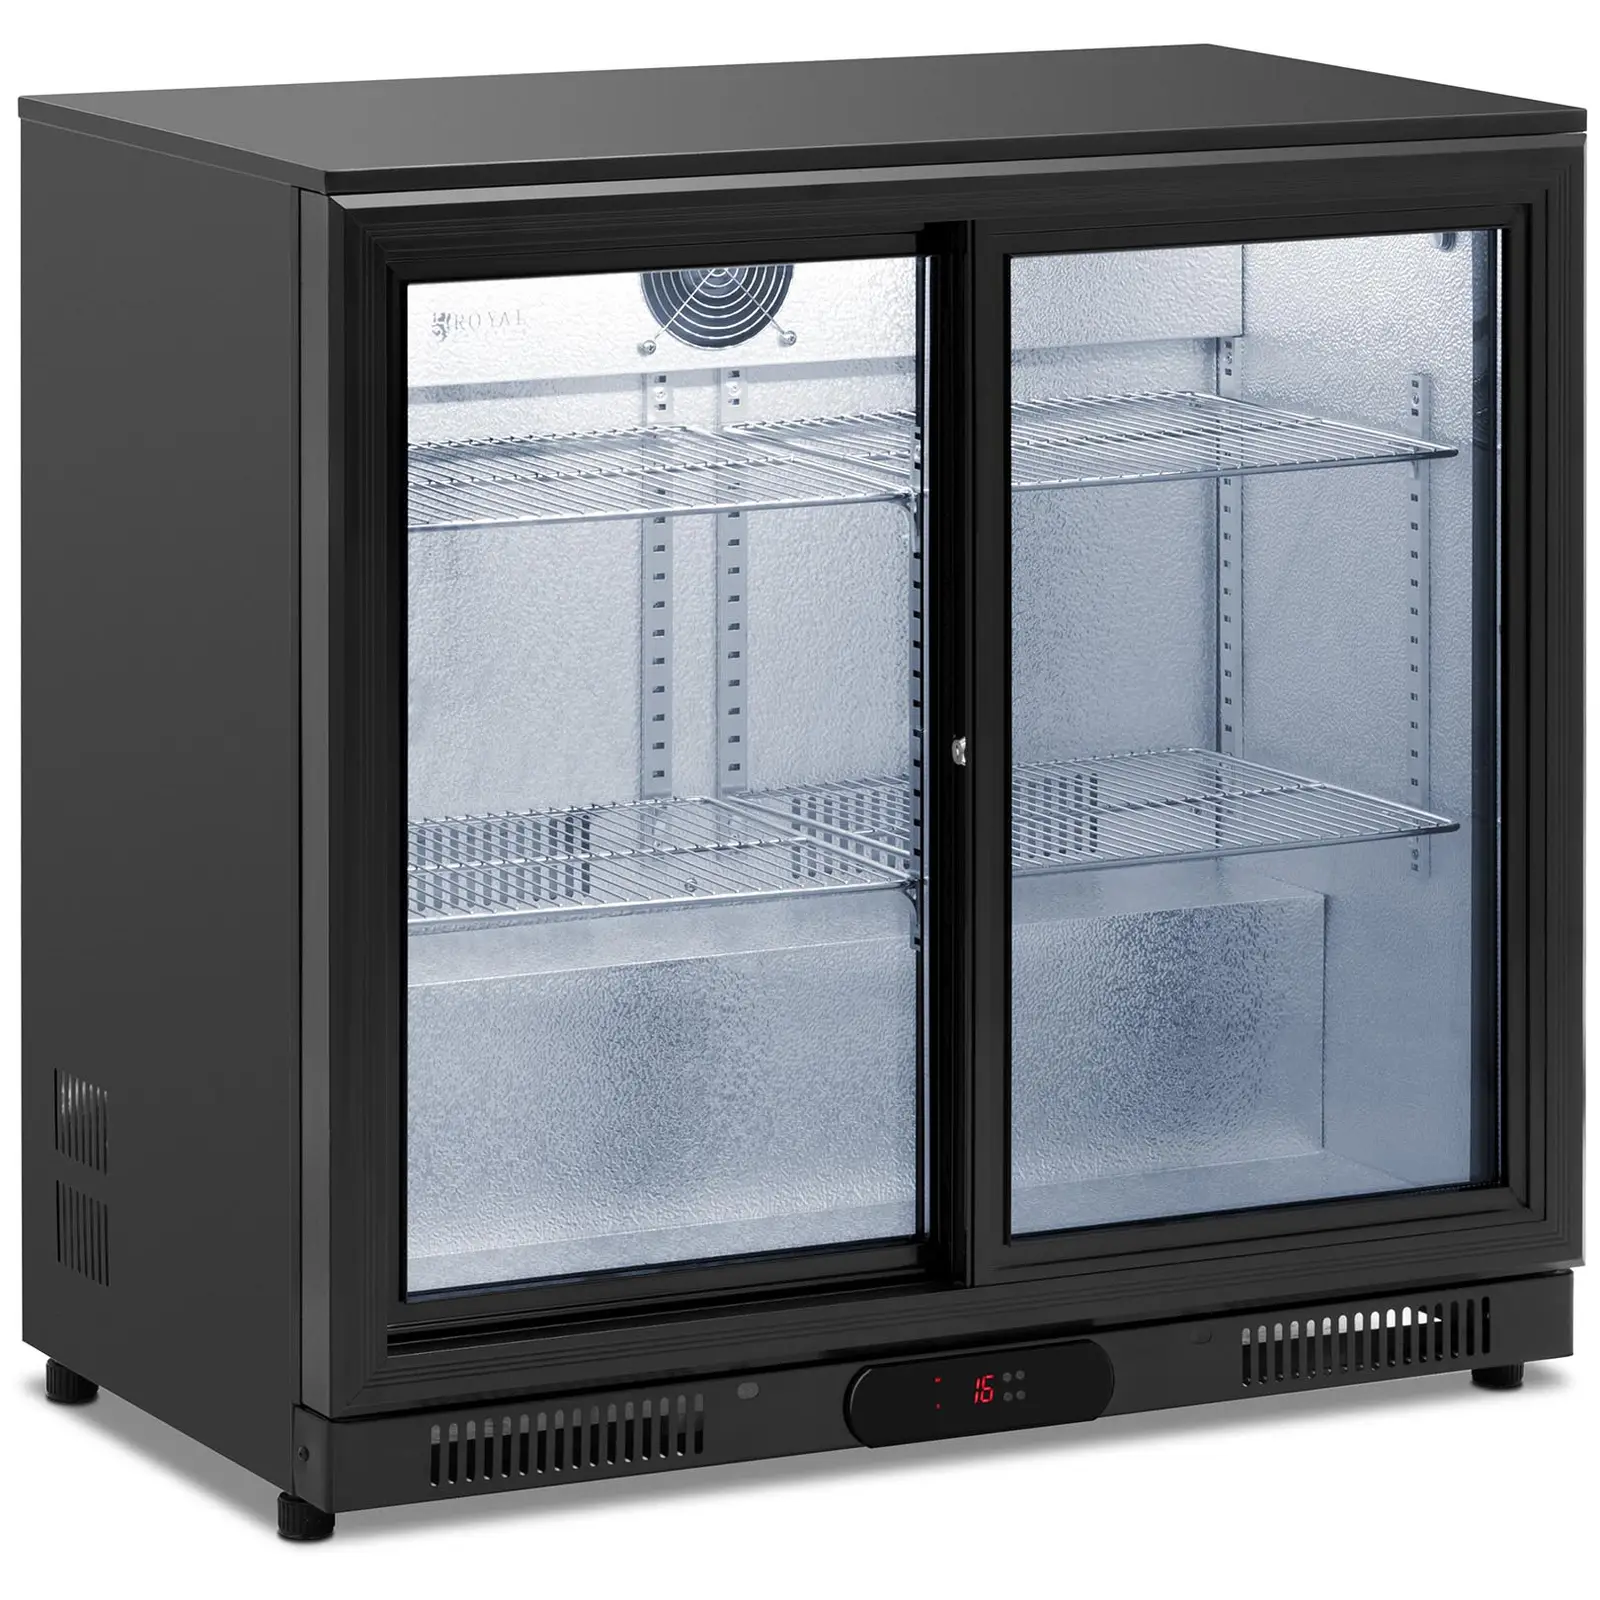 Vetrina frigo per bibite - 208 l - Royal Catering - Acciaio verniciato a polvere